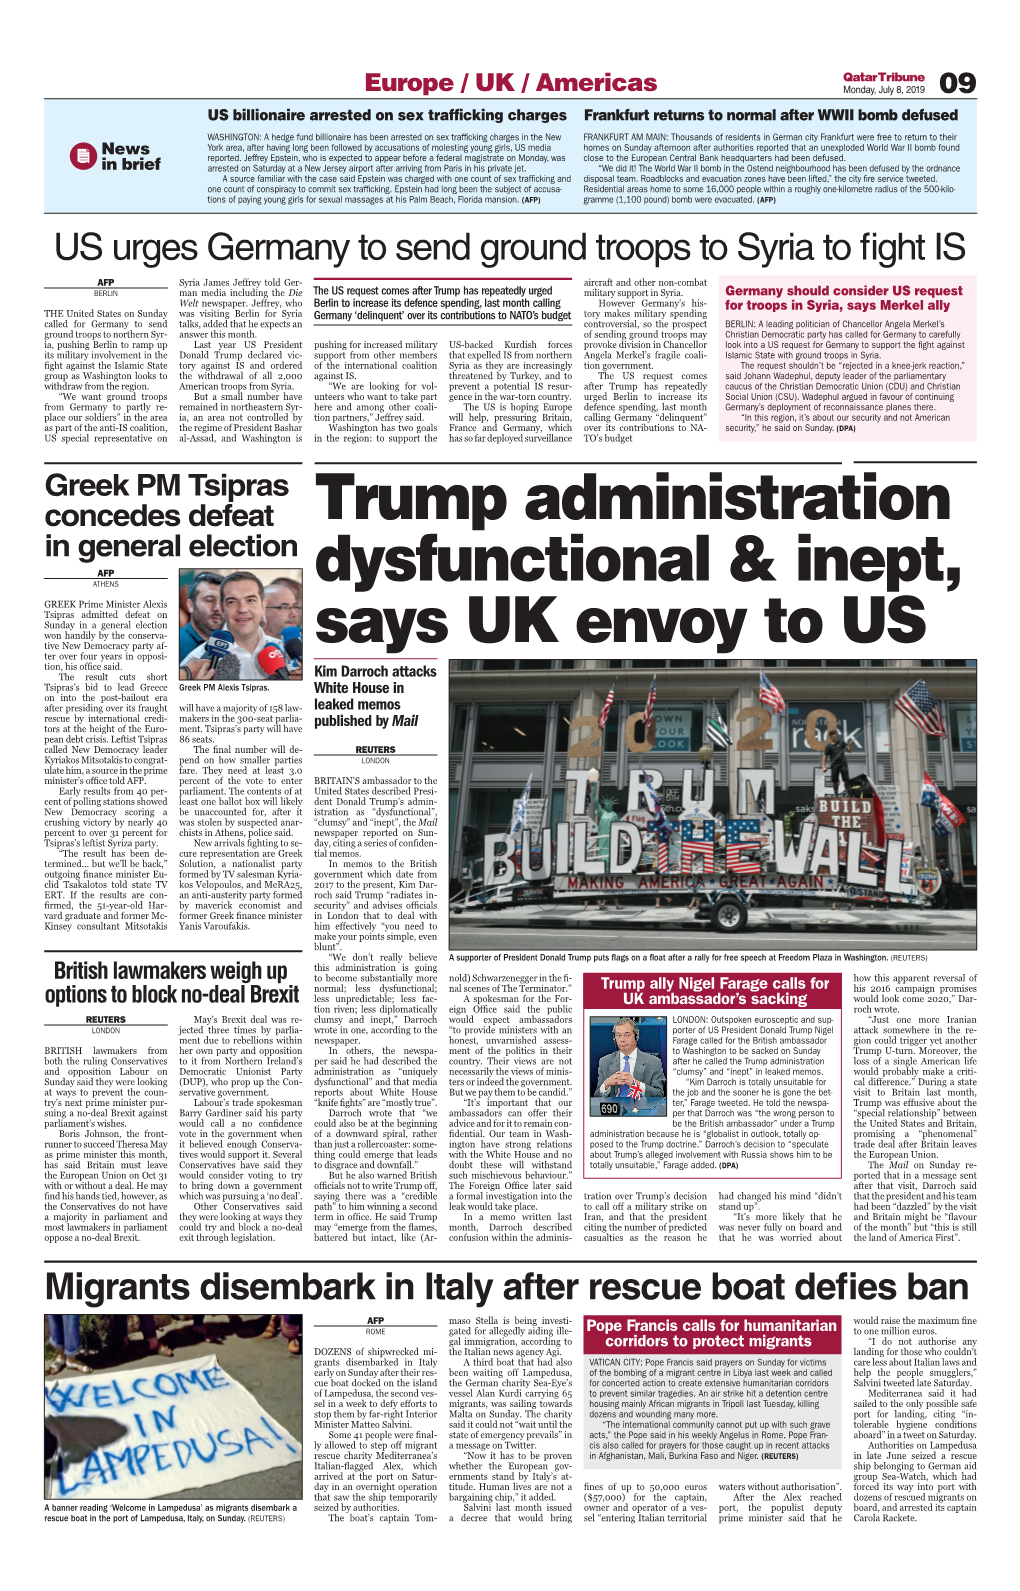 Trump Administration Dysfunctional & Inept, Says UK Envoy to US